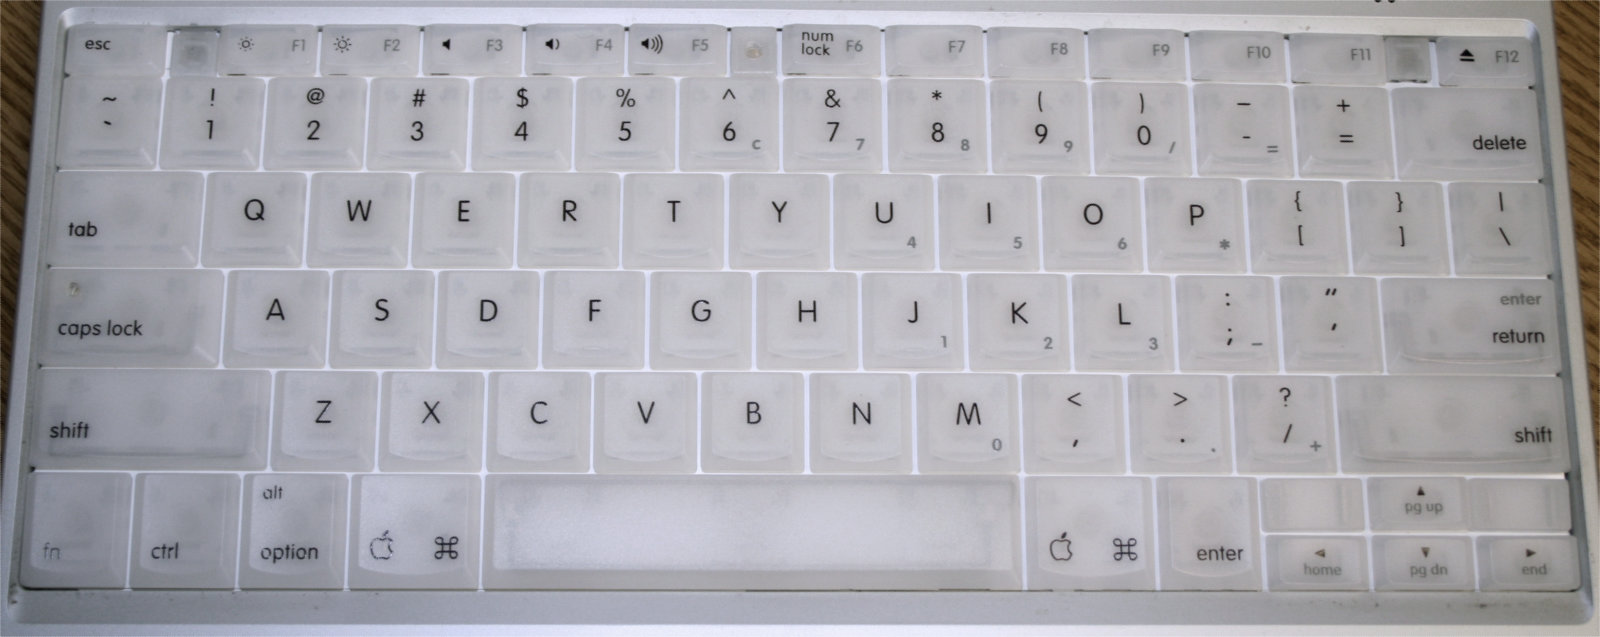 Figure 28: The iBook G4 keyboard. Source: PXHere